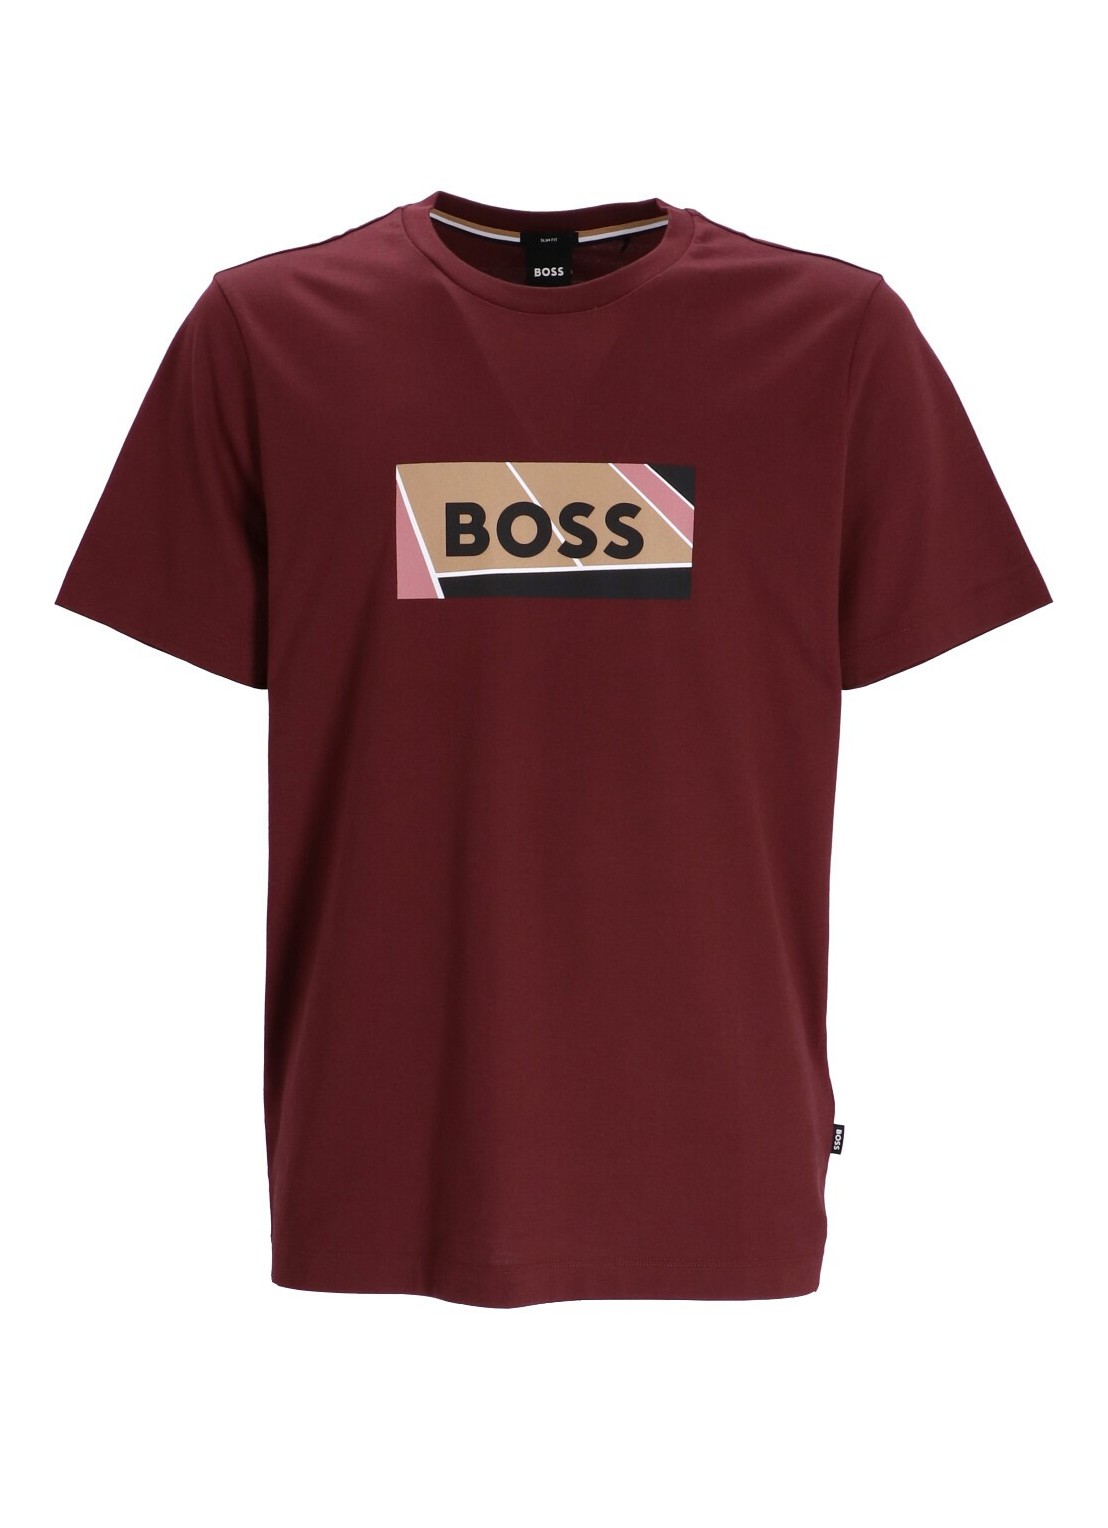 Camiseta boss t-shirt man tessler 186 50486210 601 talla XXL
 